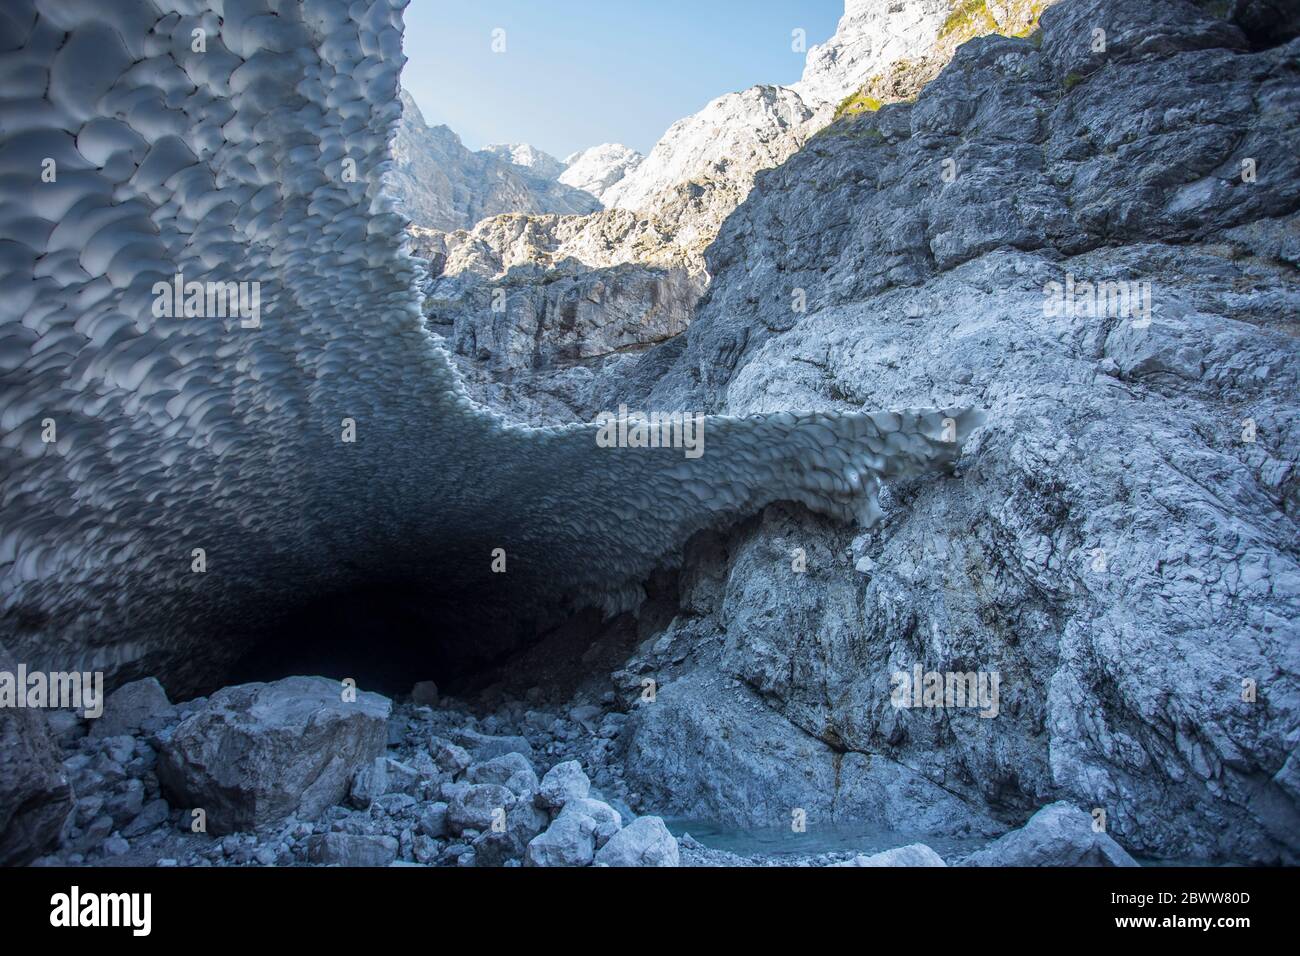 Germany, Bavaria, Berchtesgaden, Cave in Eiskapelle snowfield Stock Photo